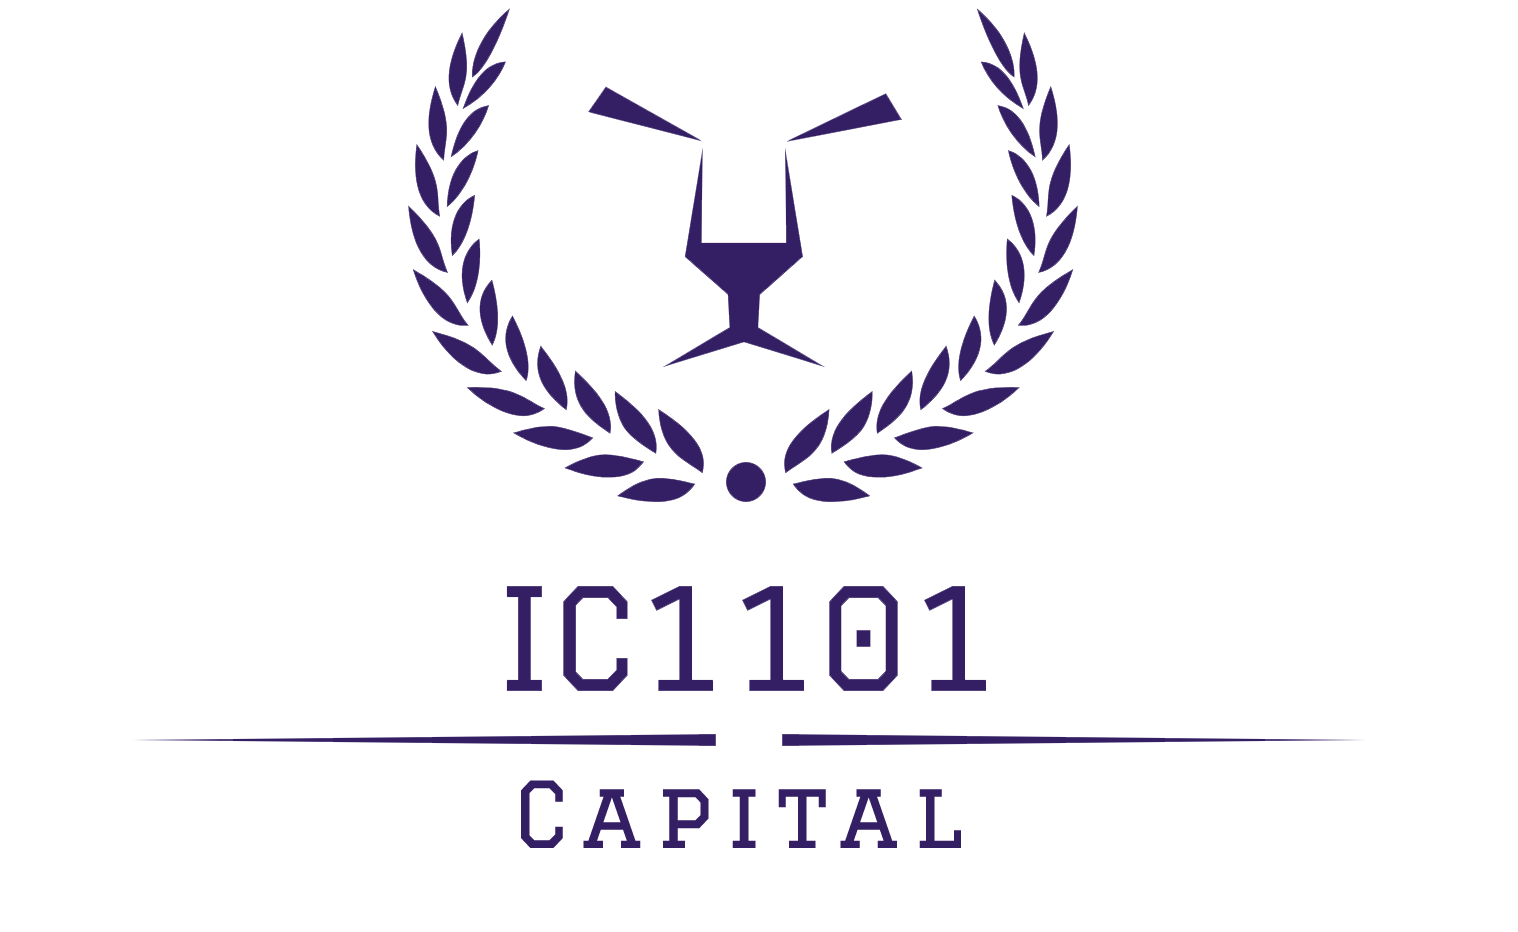 InnoVen Capital